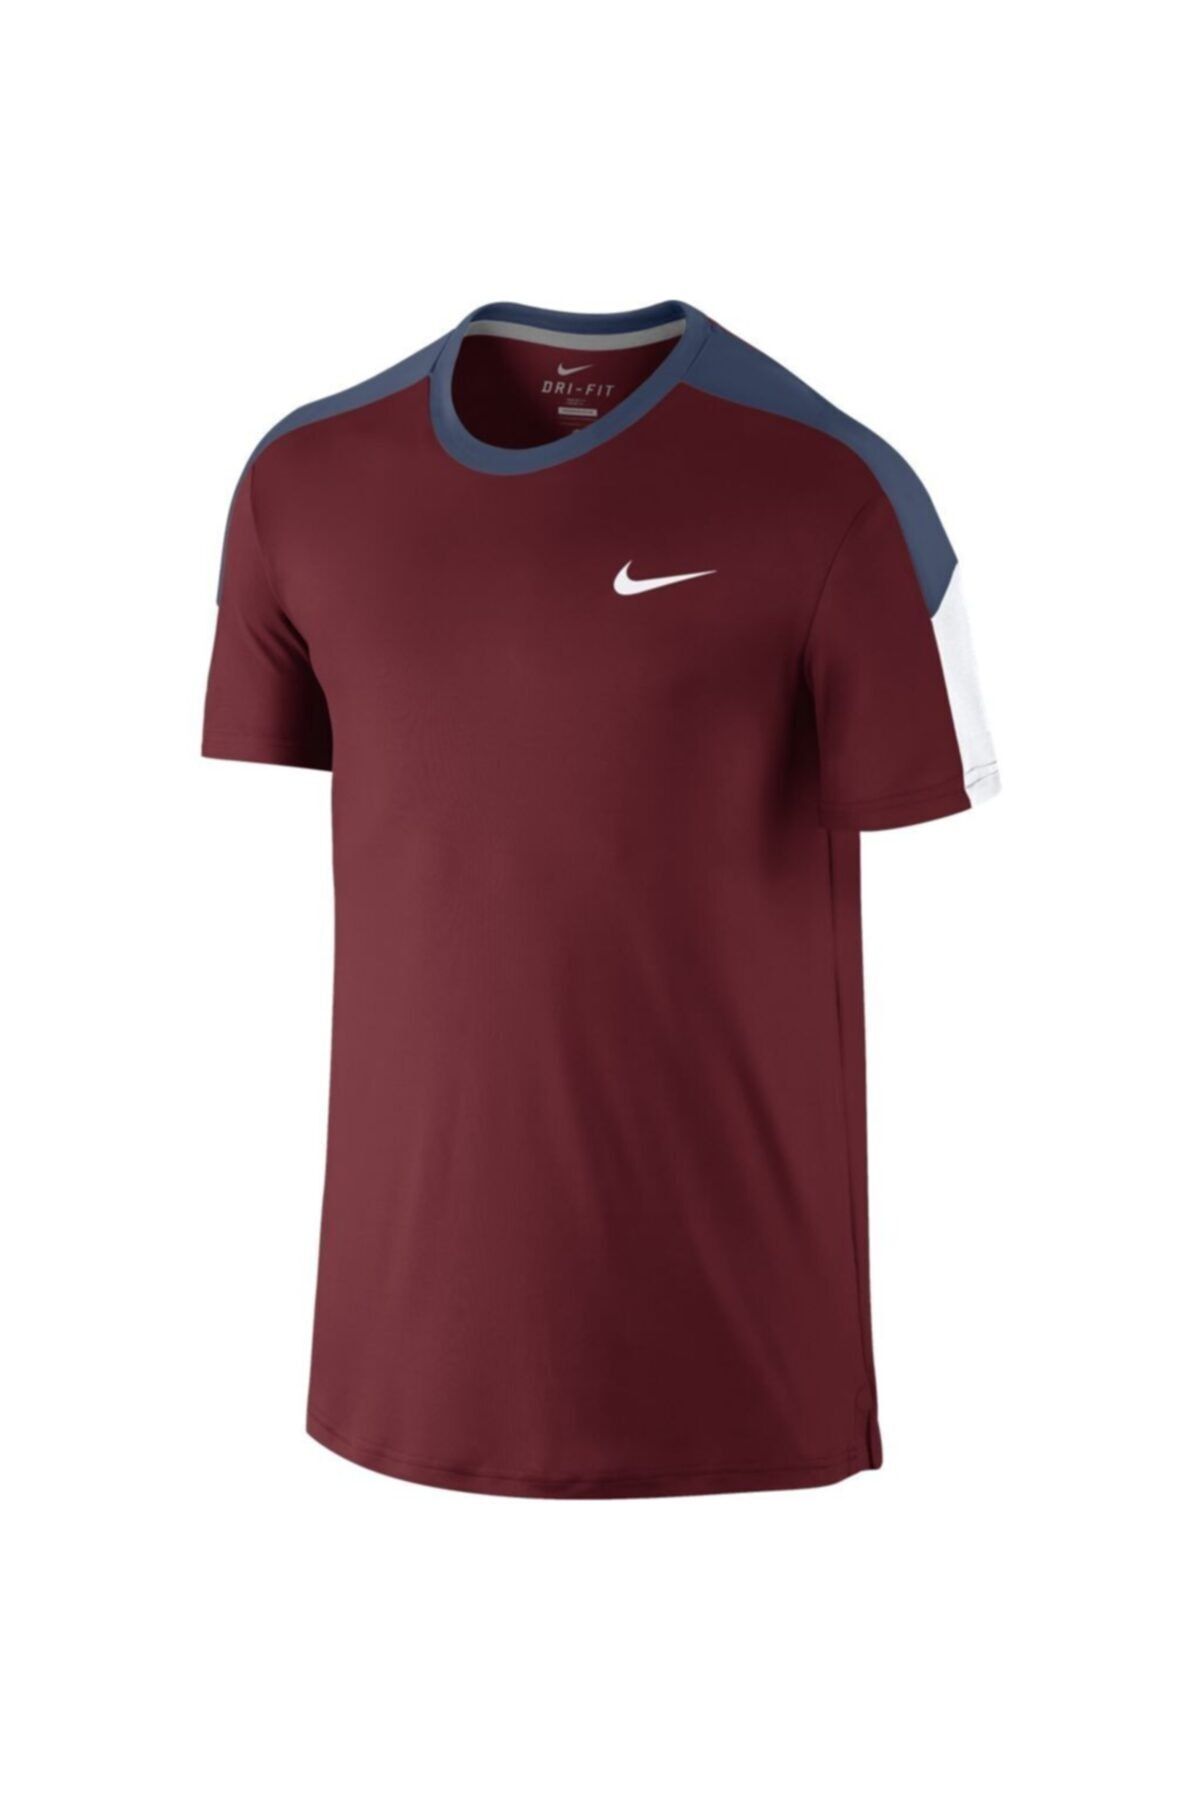 Nike Kadın Bordo Spor T-Shirt 644784-677